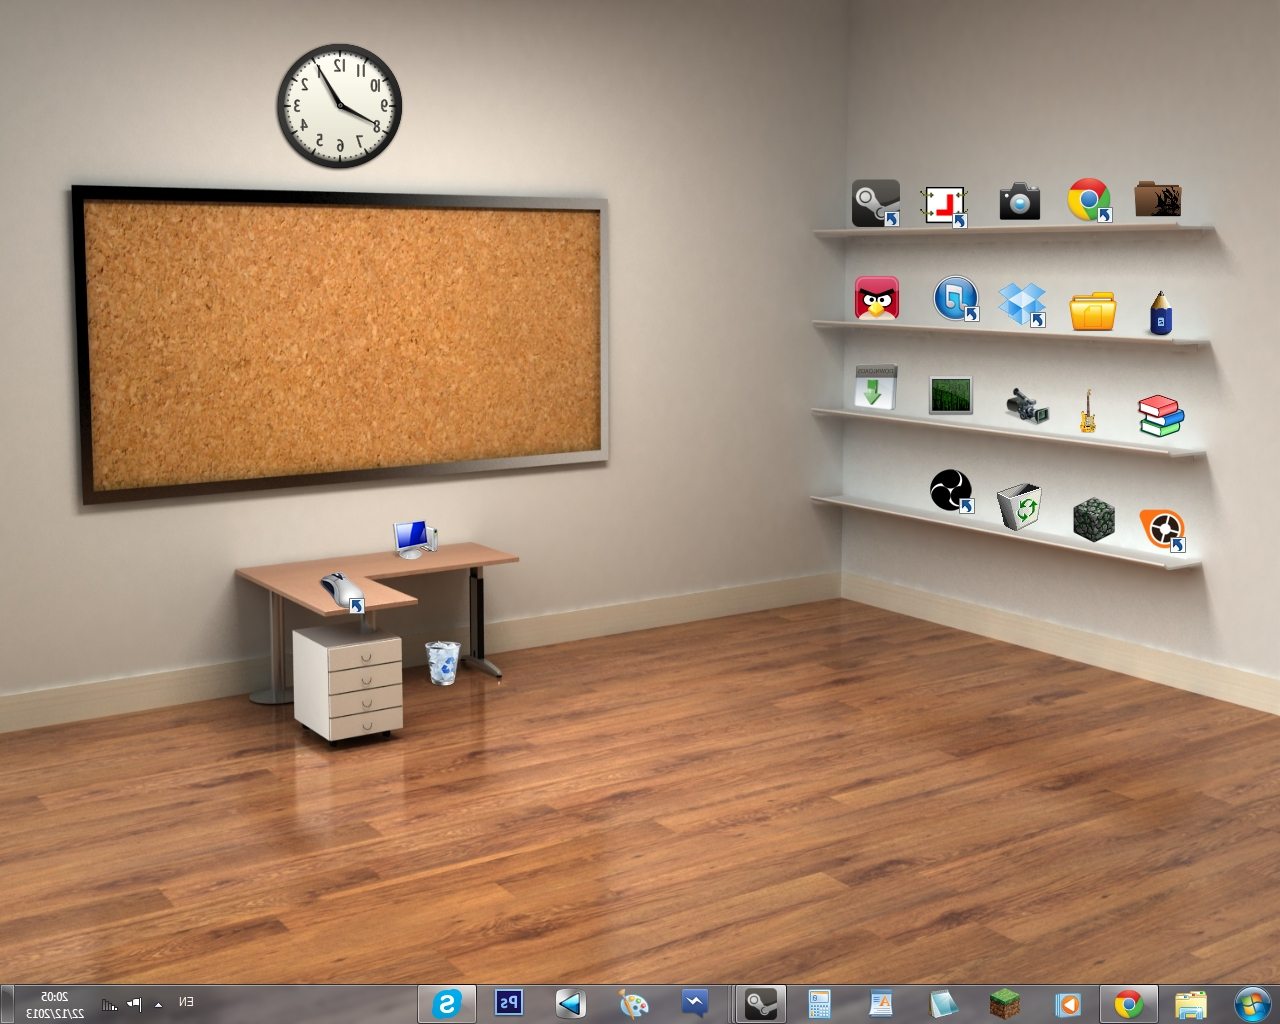 Similiar Background Desktop Organizer Shelf Keywords